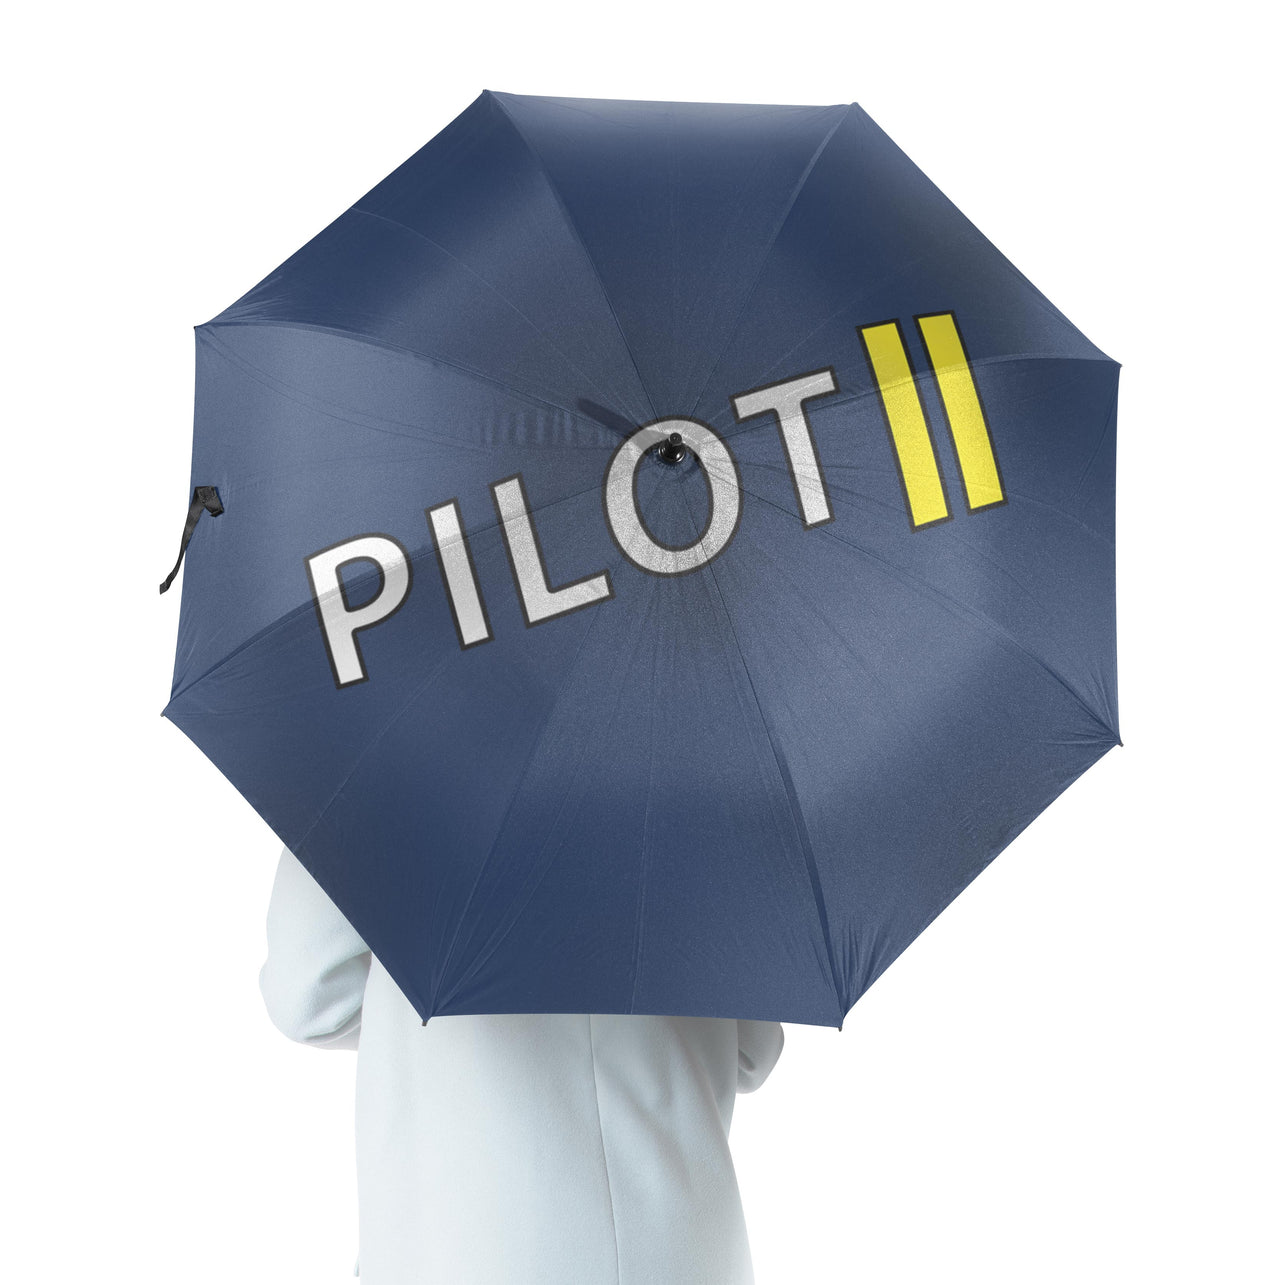 Pilot & Stripes (2 Lines) Designed Umbrella